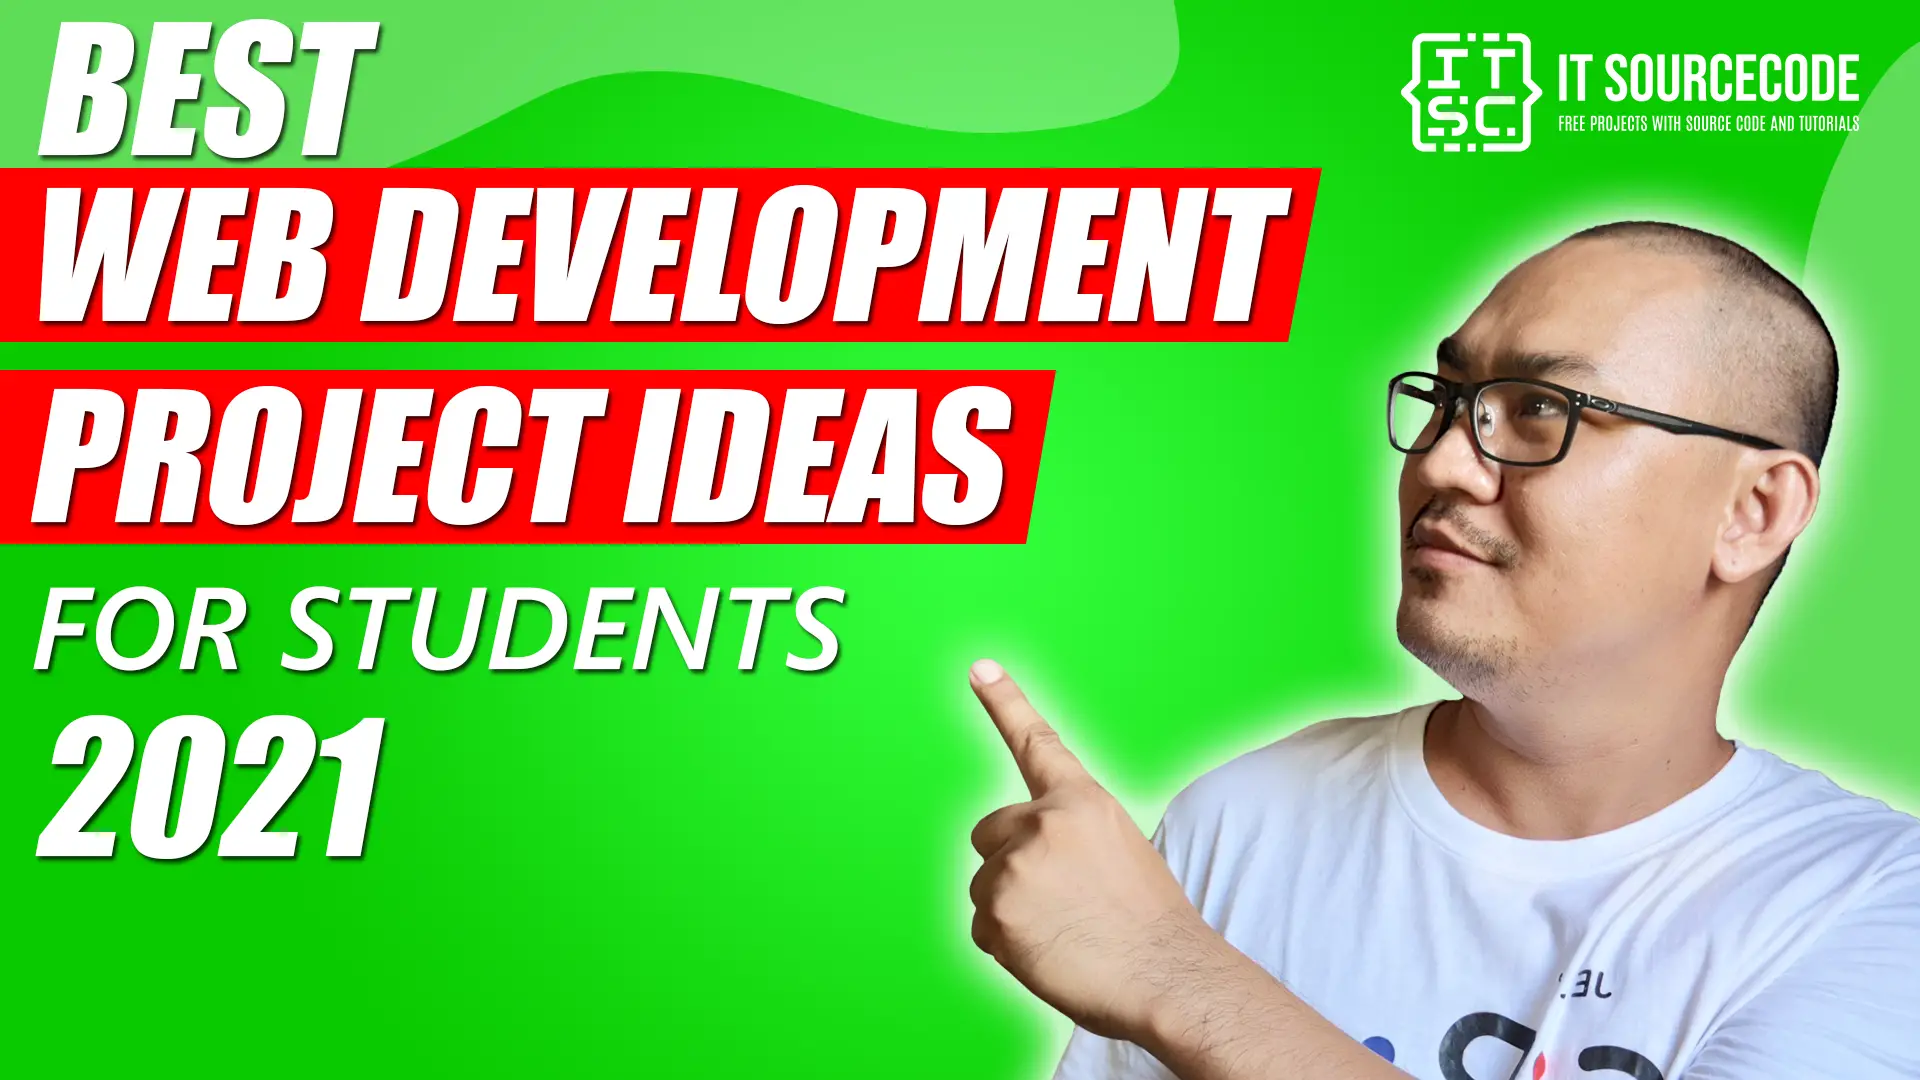 Web development project ideas for students 2021 PHP & Django